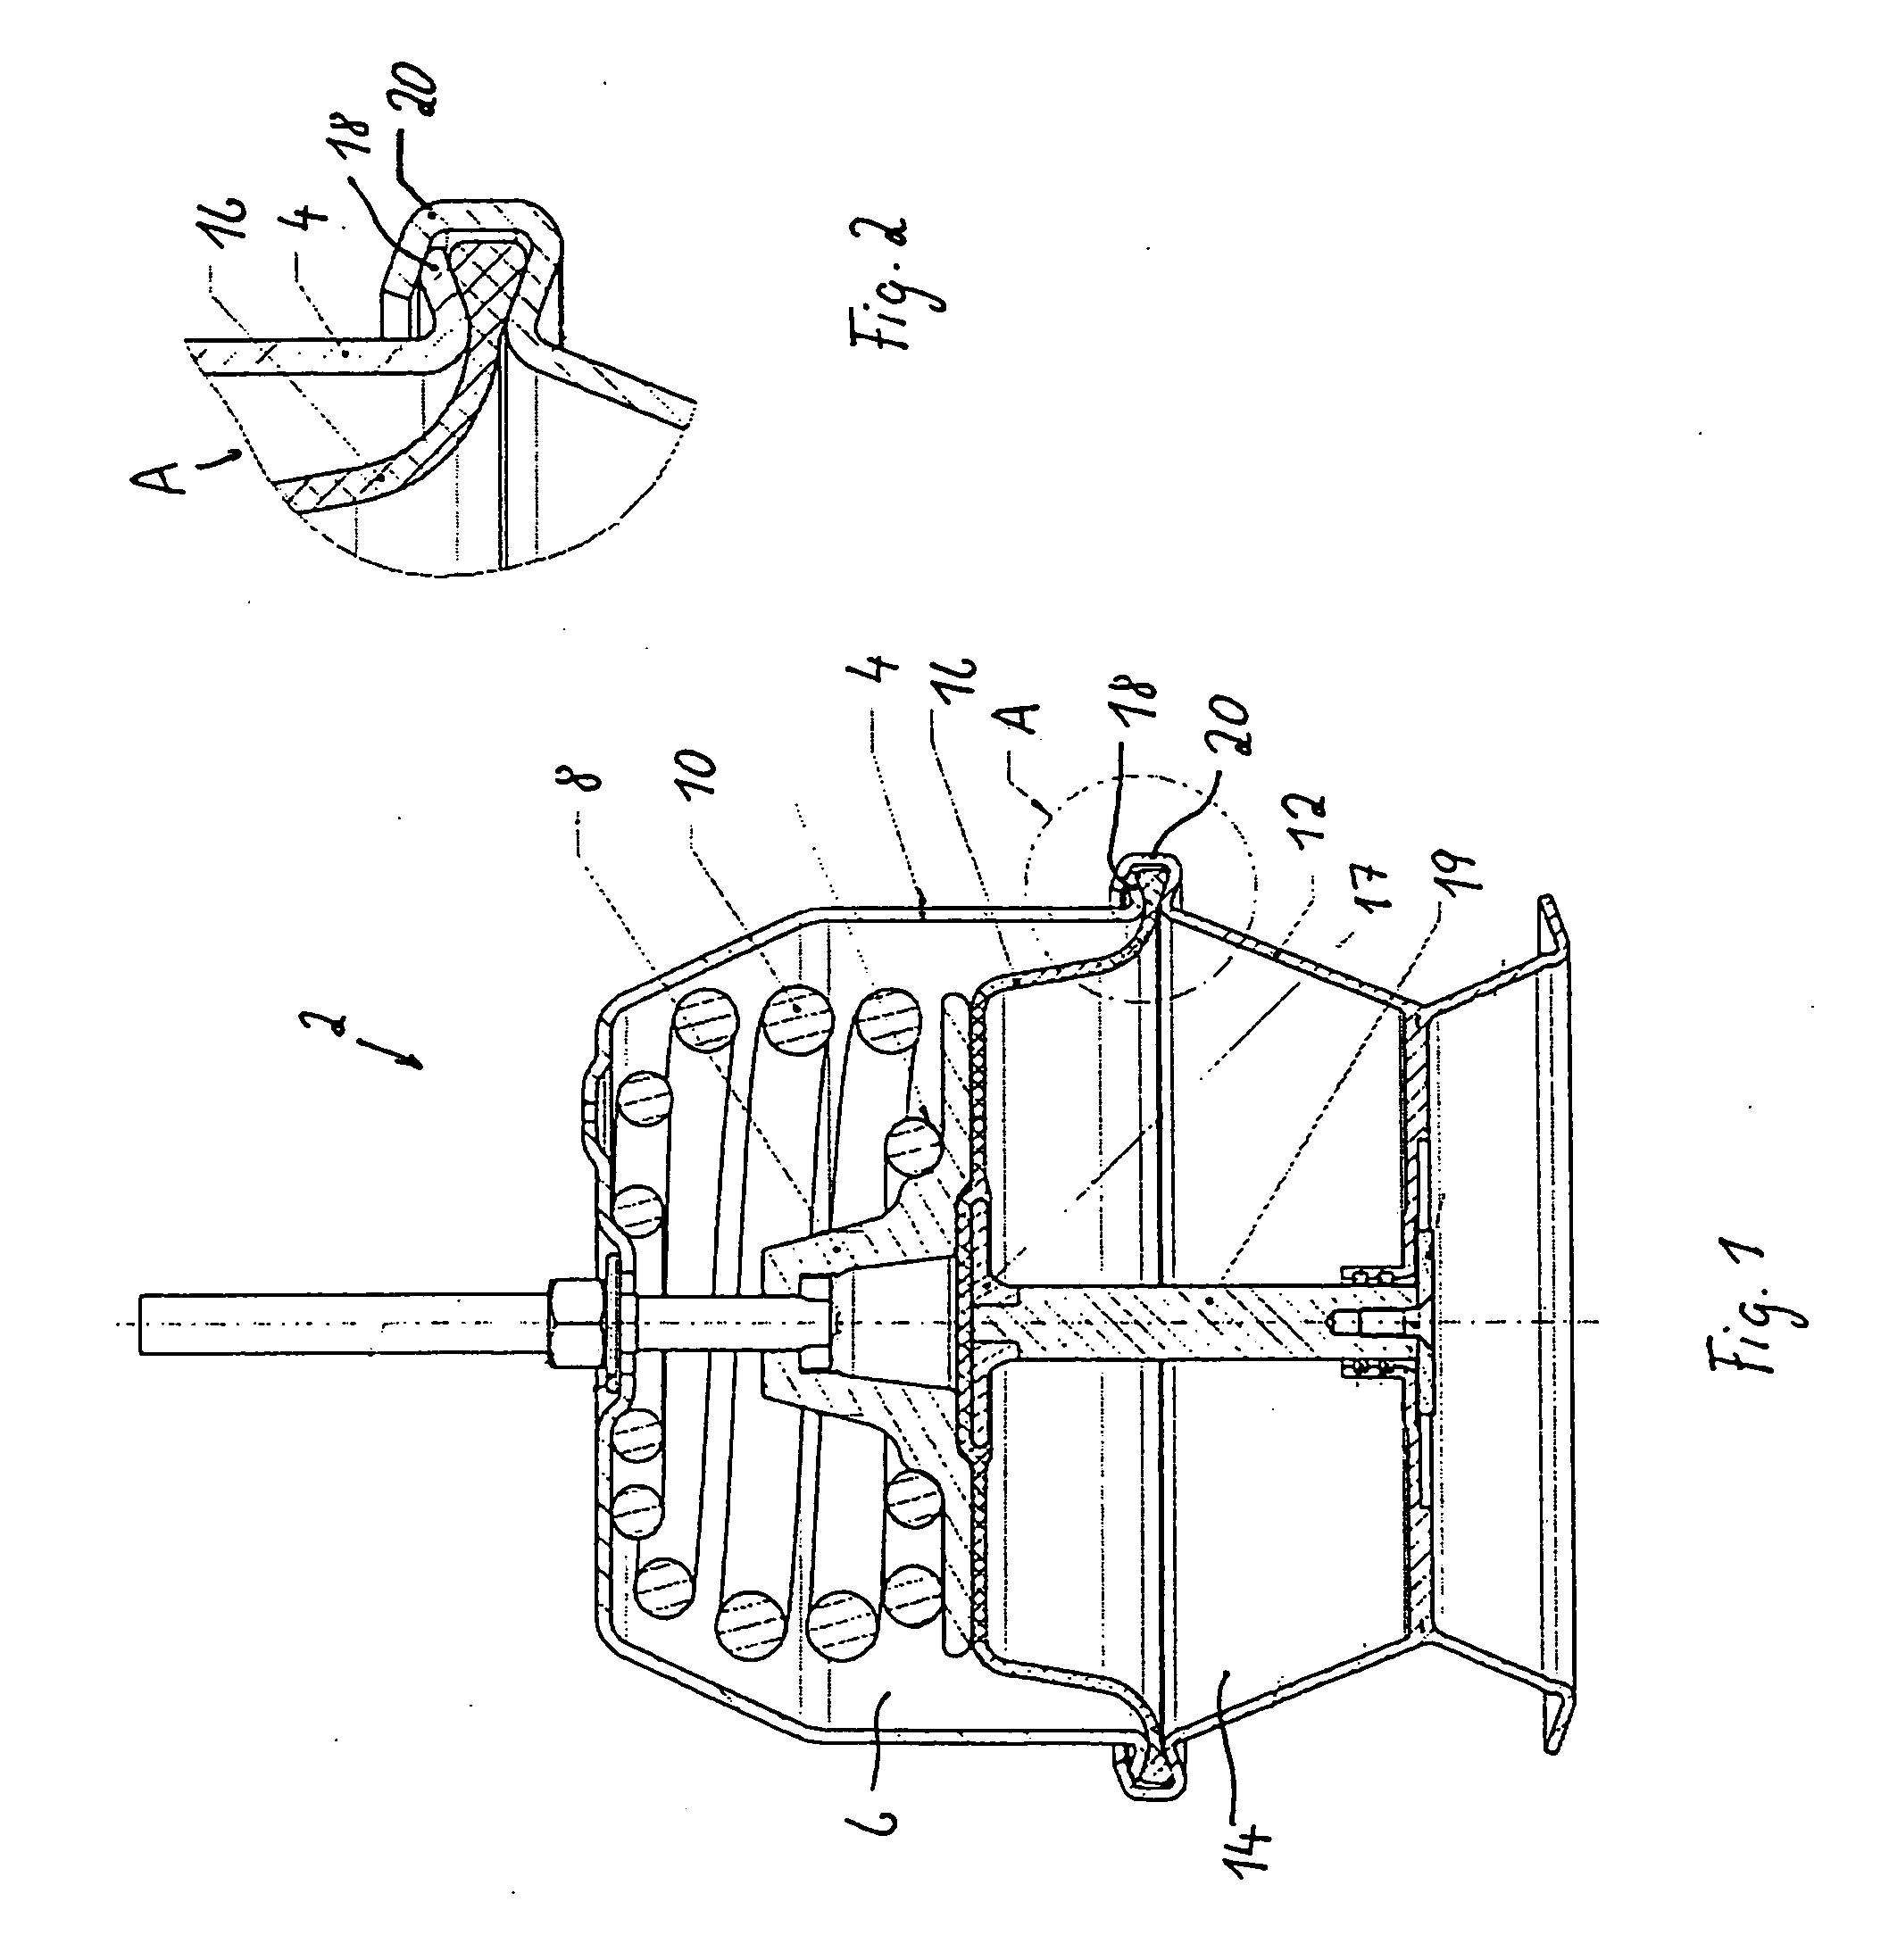 Spring-actuated brake cylinder